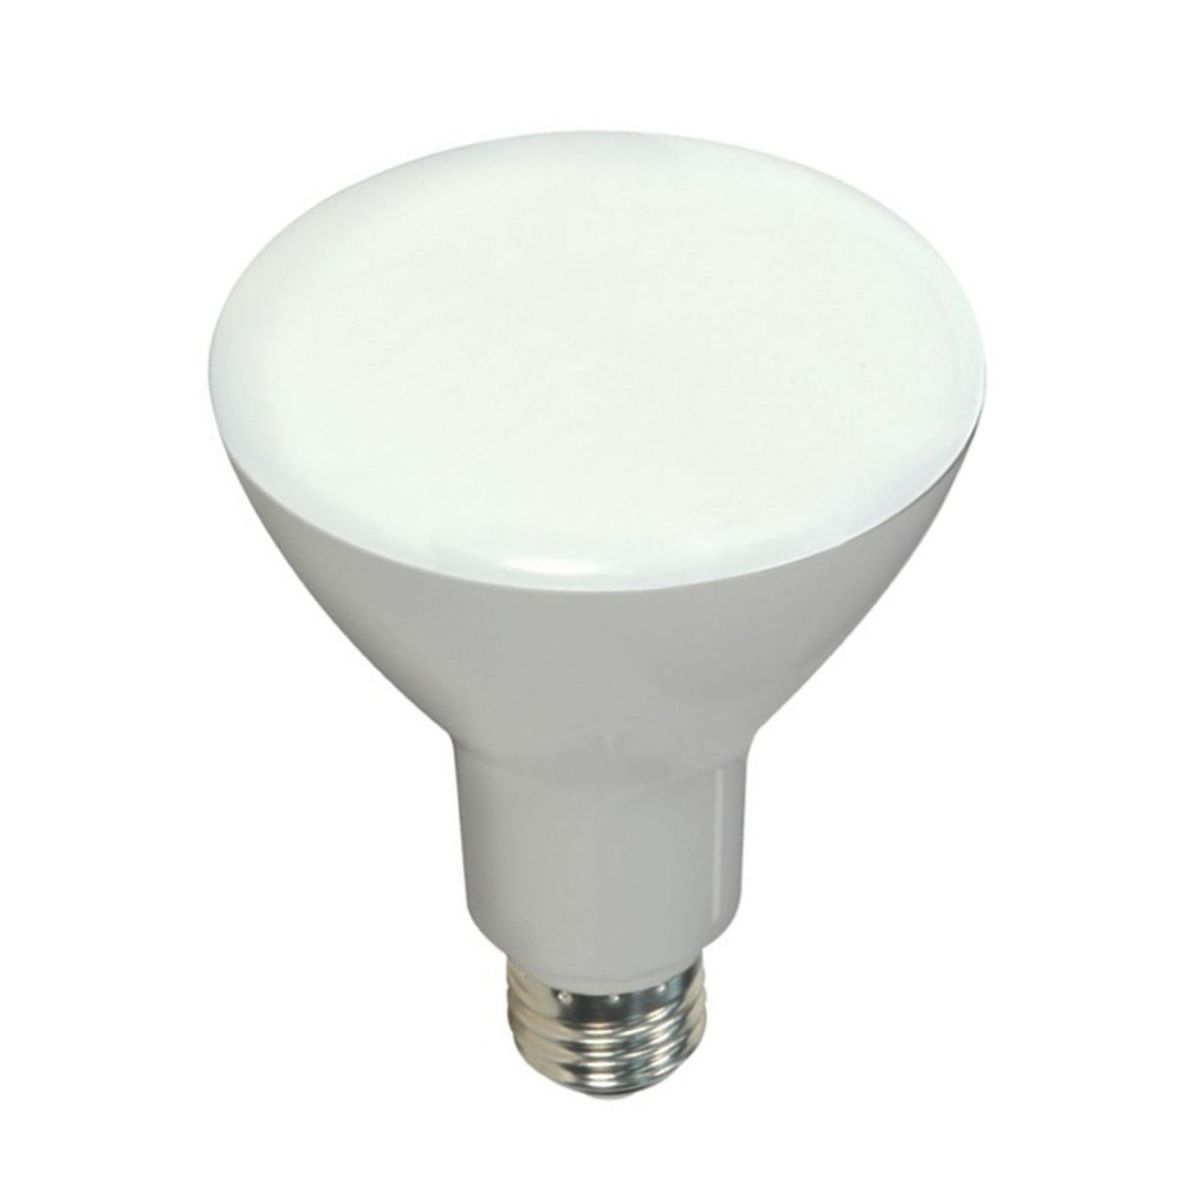 LED R30/BR30 Reflector bulb, 10 watt, 650 Lumens, 2700K, E26 Medium Base, 105 Deg. Flood, Dimmable